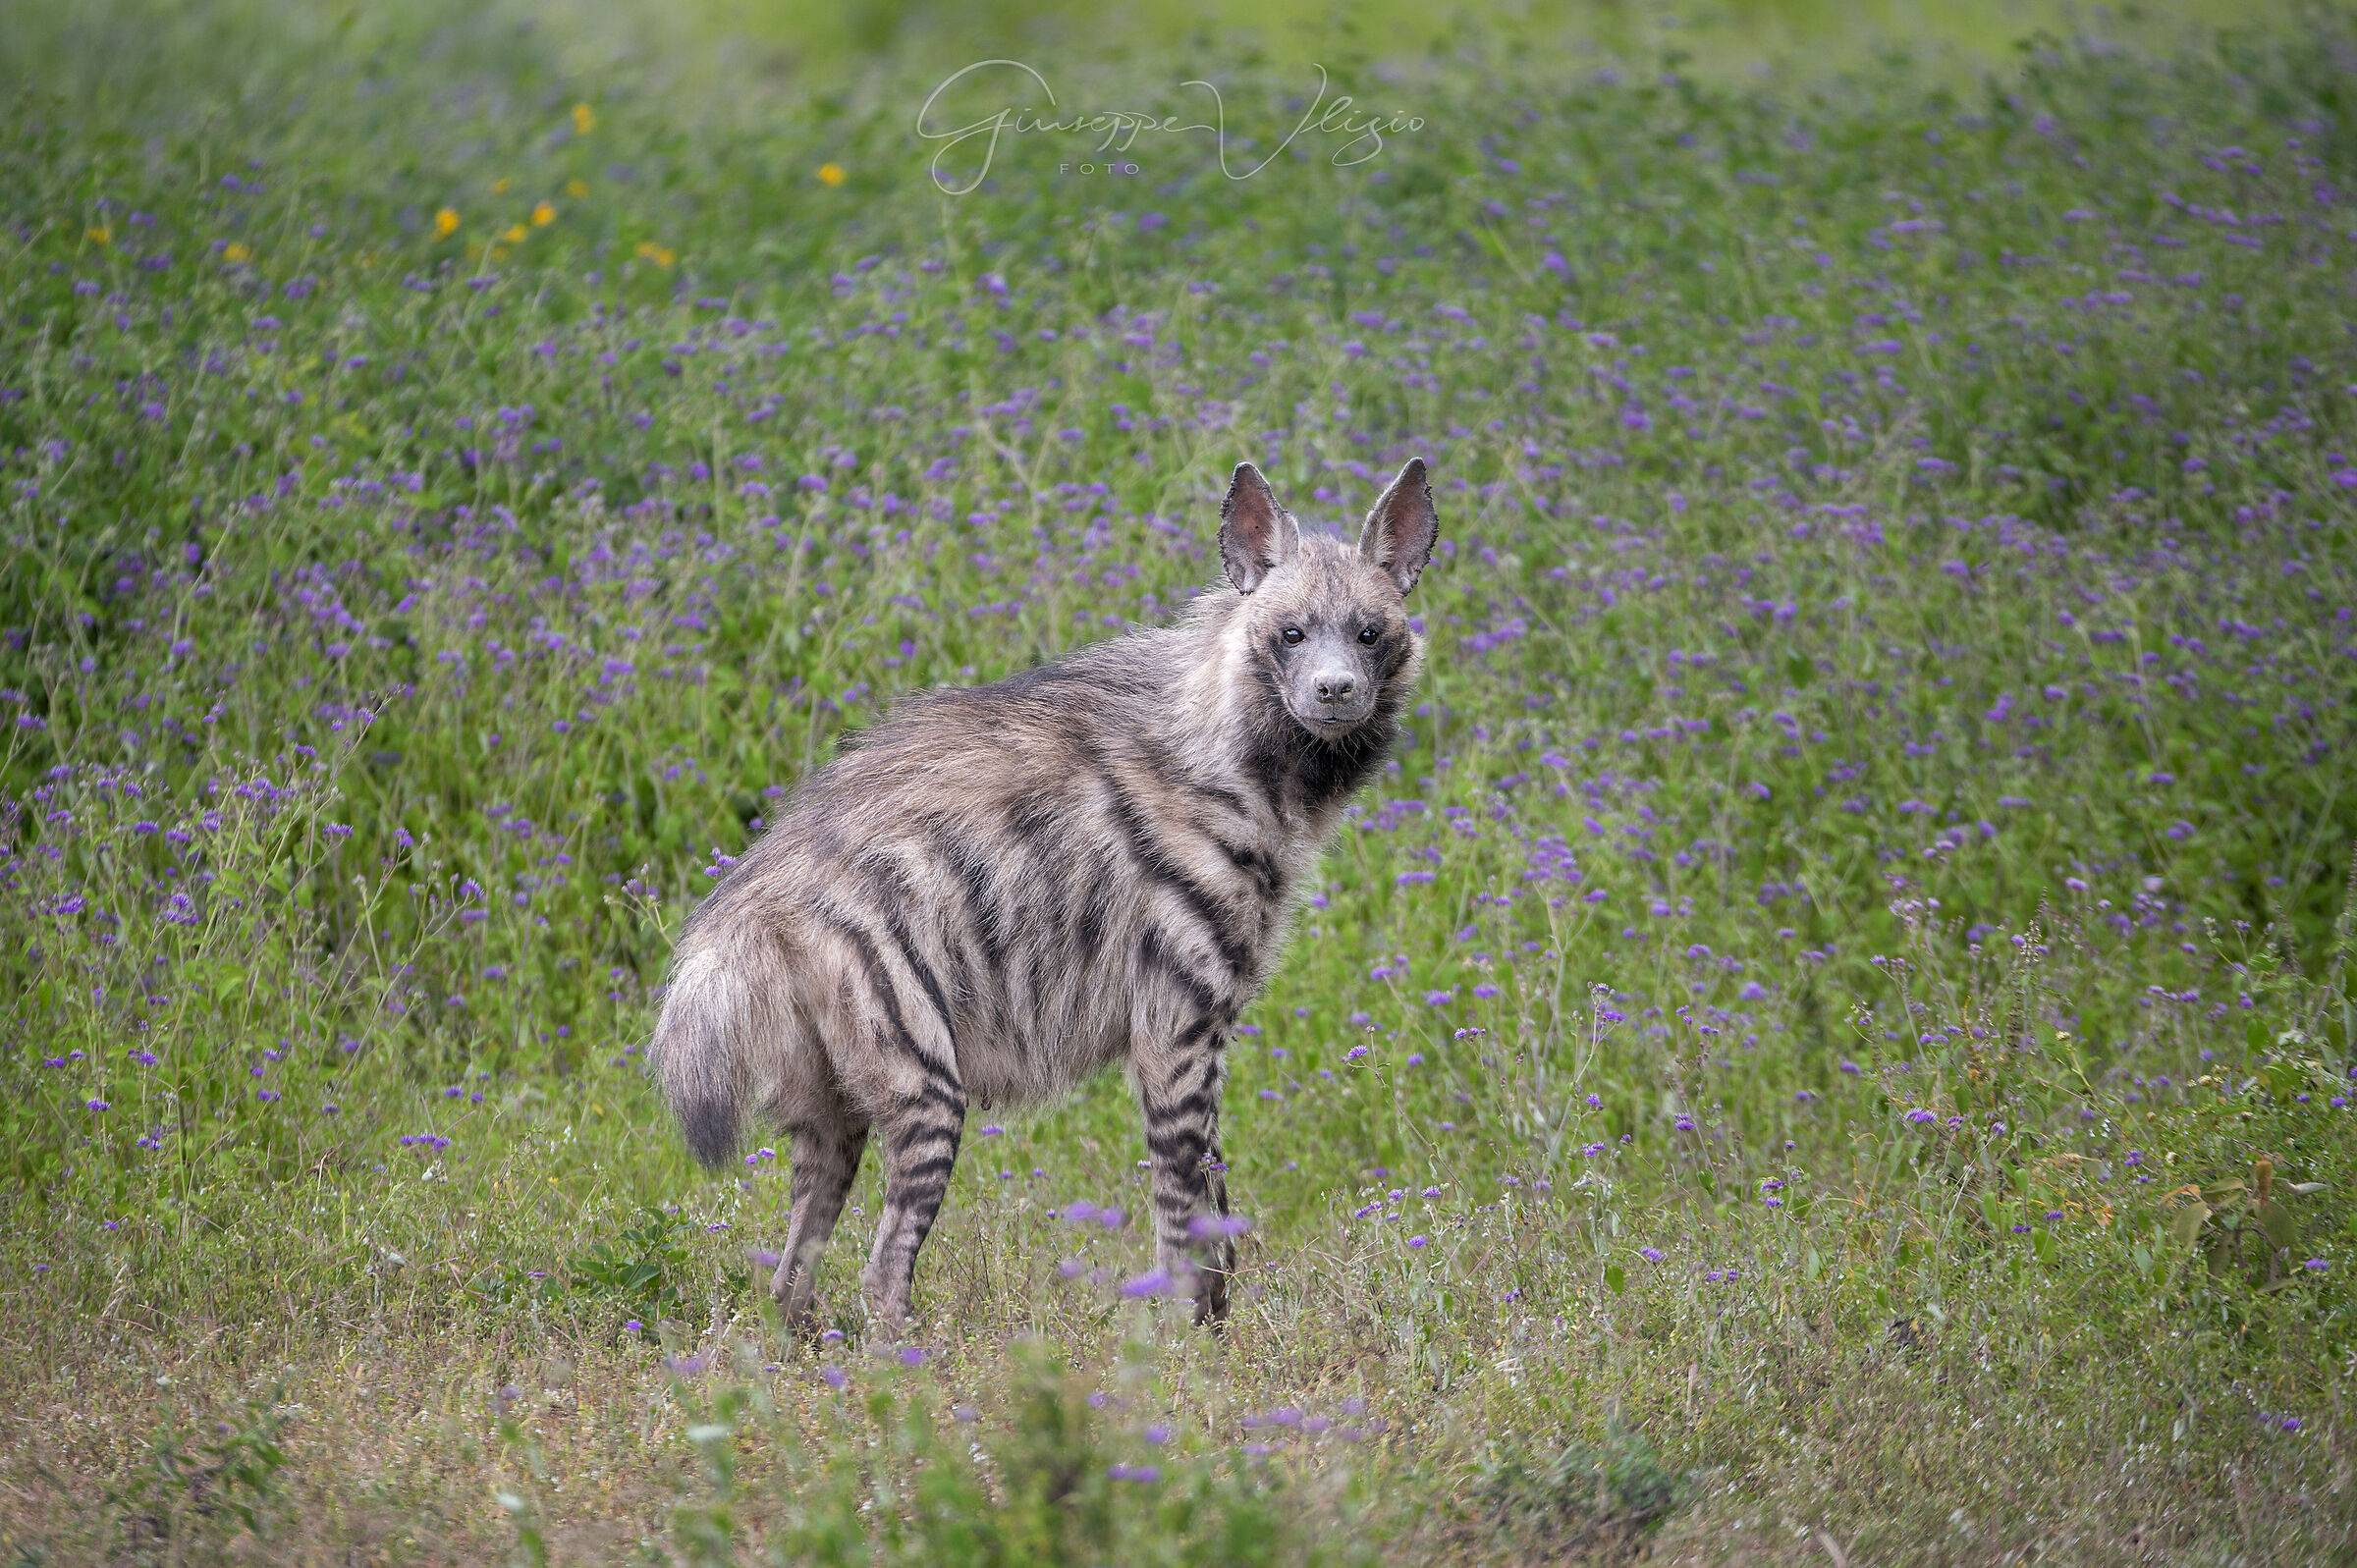 The striped hyena...